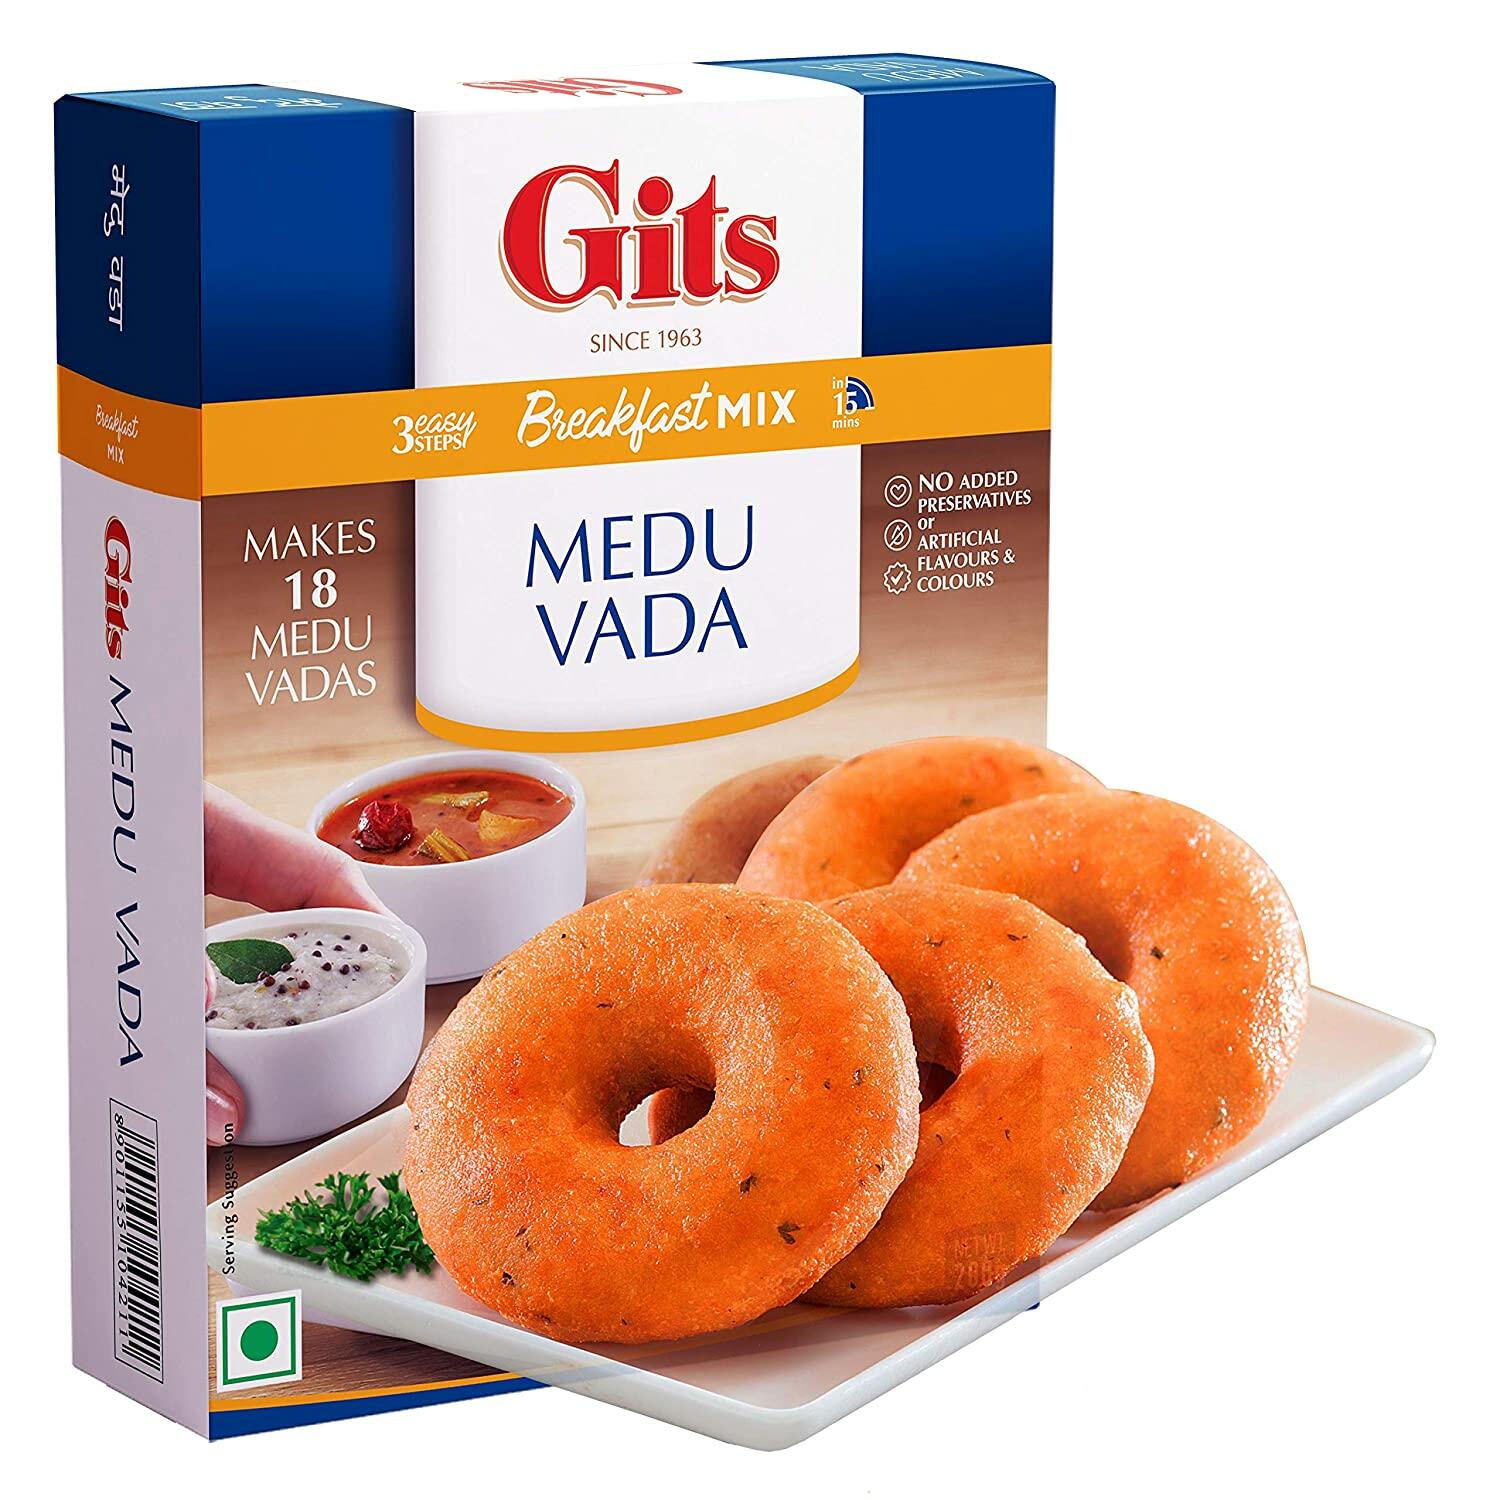 Gits Medhu Vada Mix 200g - Best Before Apr '23